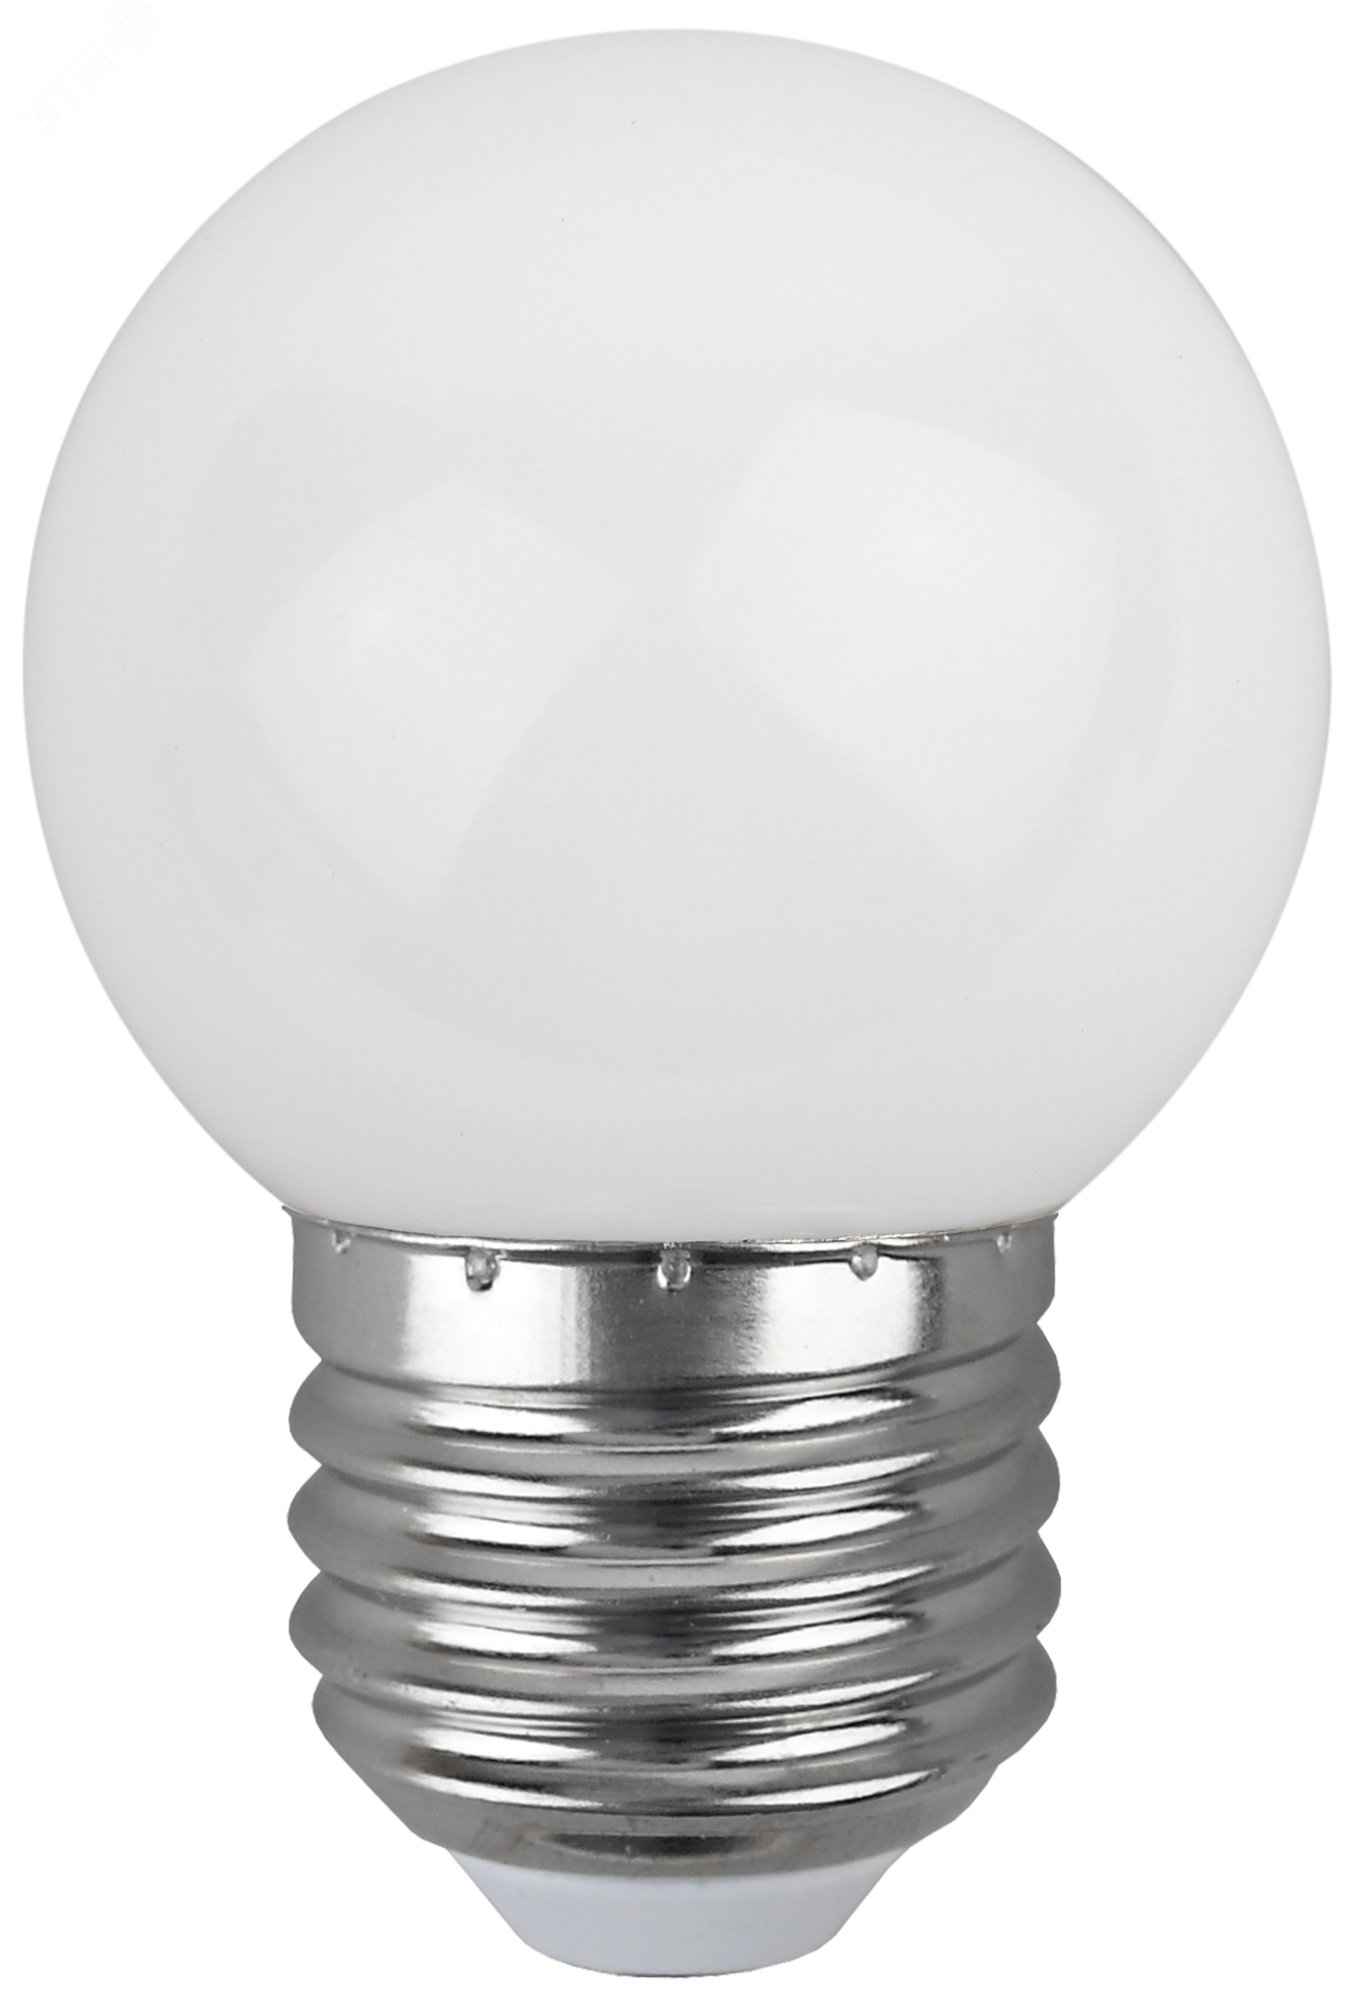 Лампа светодиодная для Белт-Лайт диод. шар, бел., 4SMD, 1W, E27 ERAW45-E27 LED Р45-1W-E27 Б0049577 ЭРА - превью 3